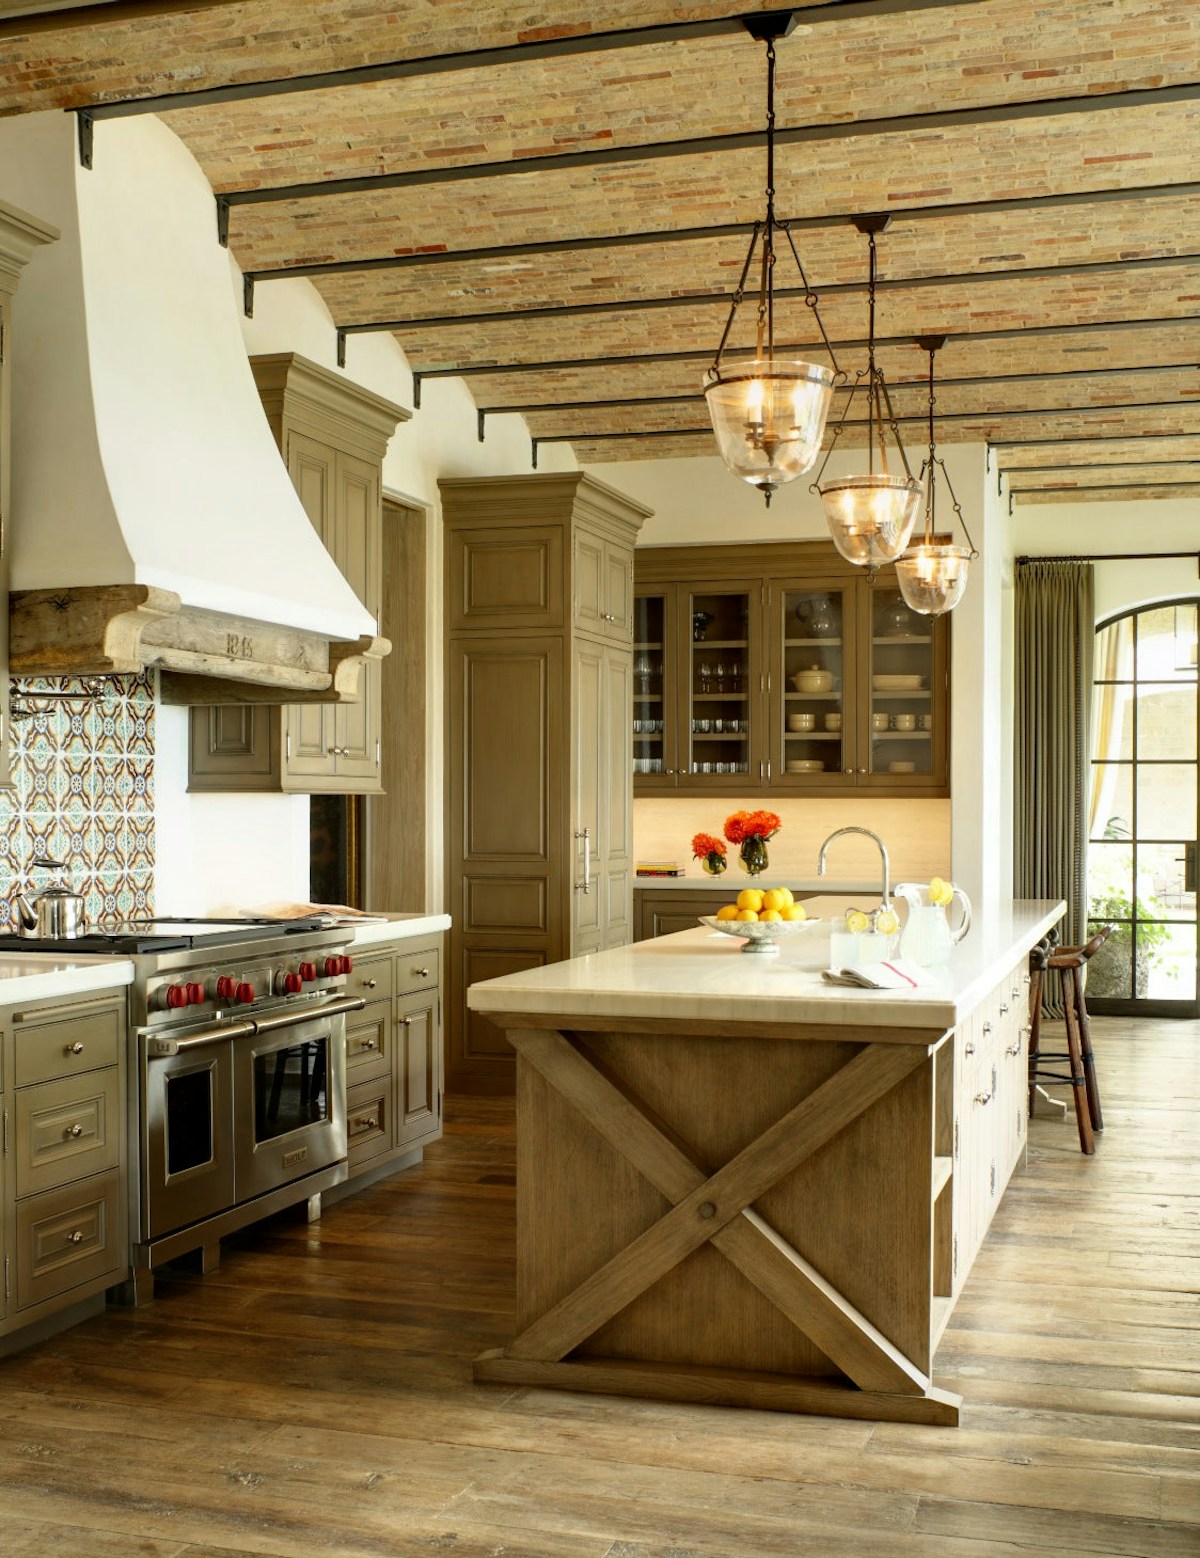 Amazing Kitchen Design Ideas – Landry Design Group kitchen - LuxDeco.com Style Guide